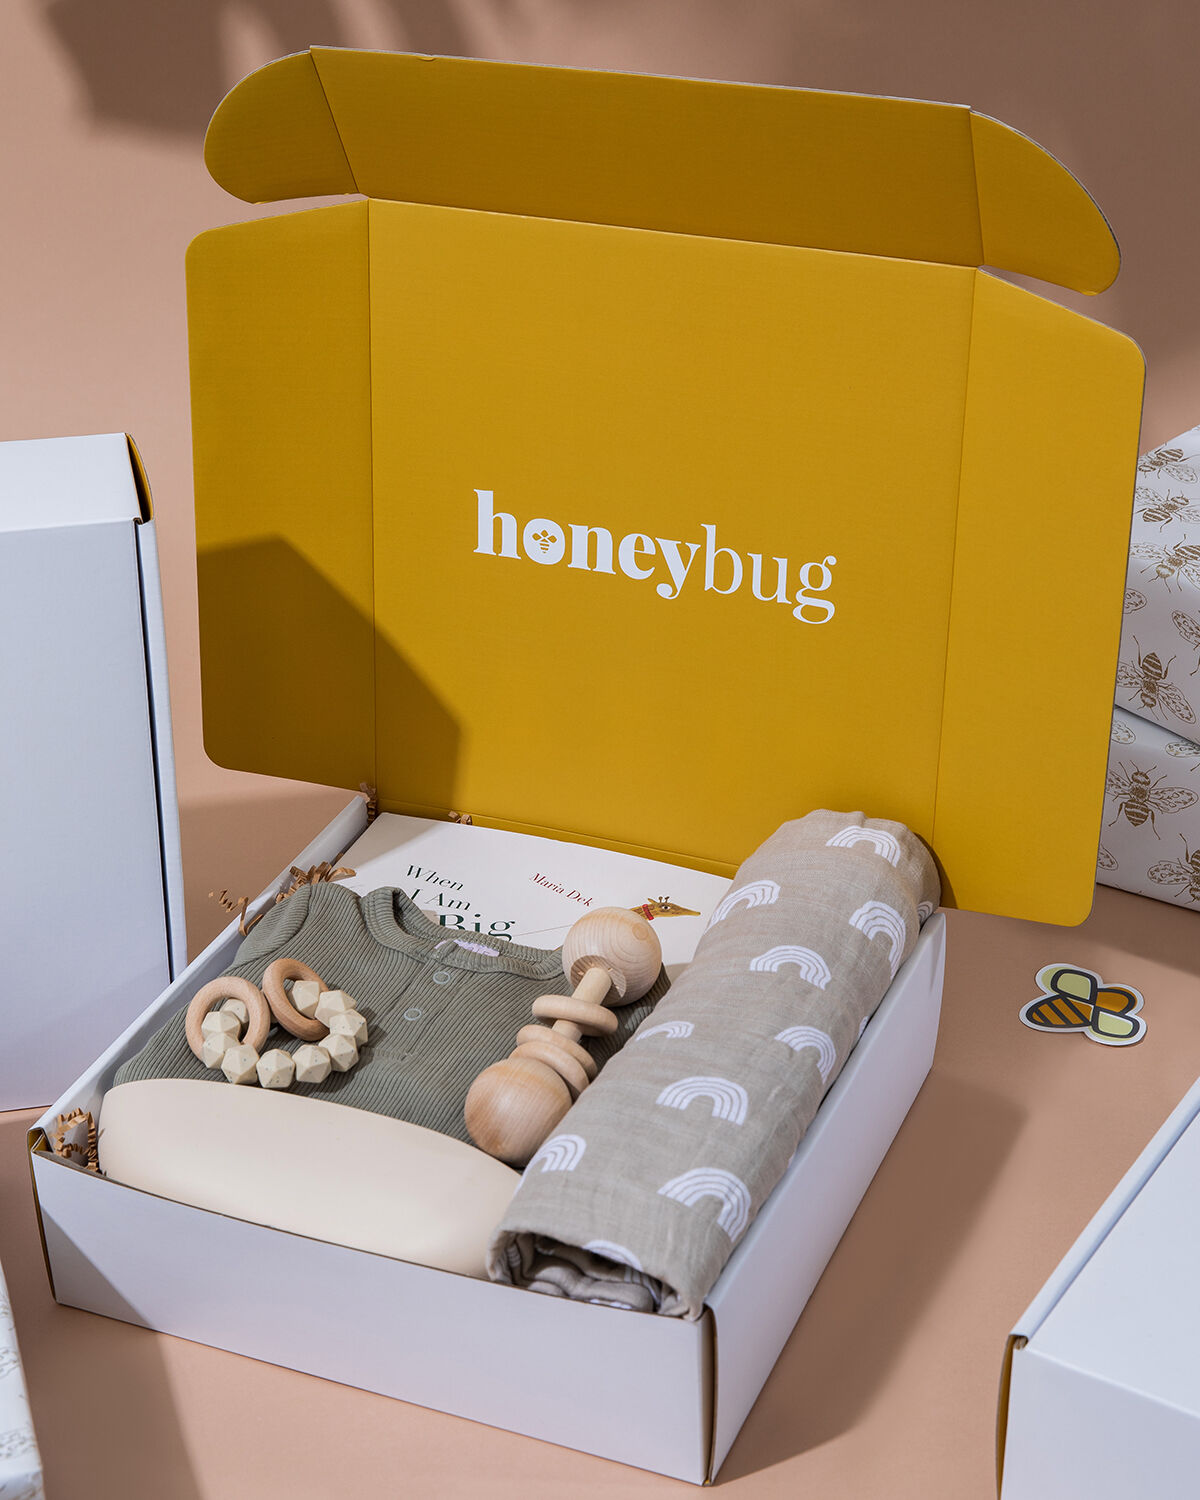 Honeybug Gift Box / Open Box